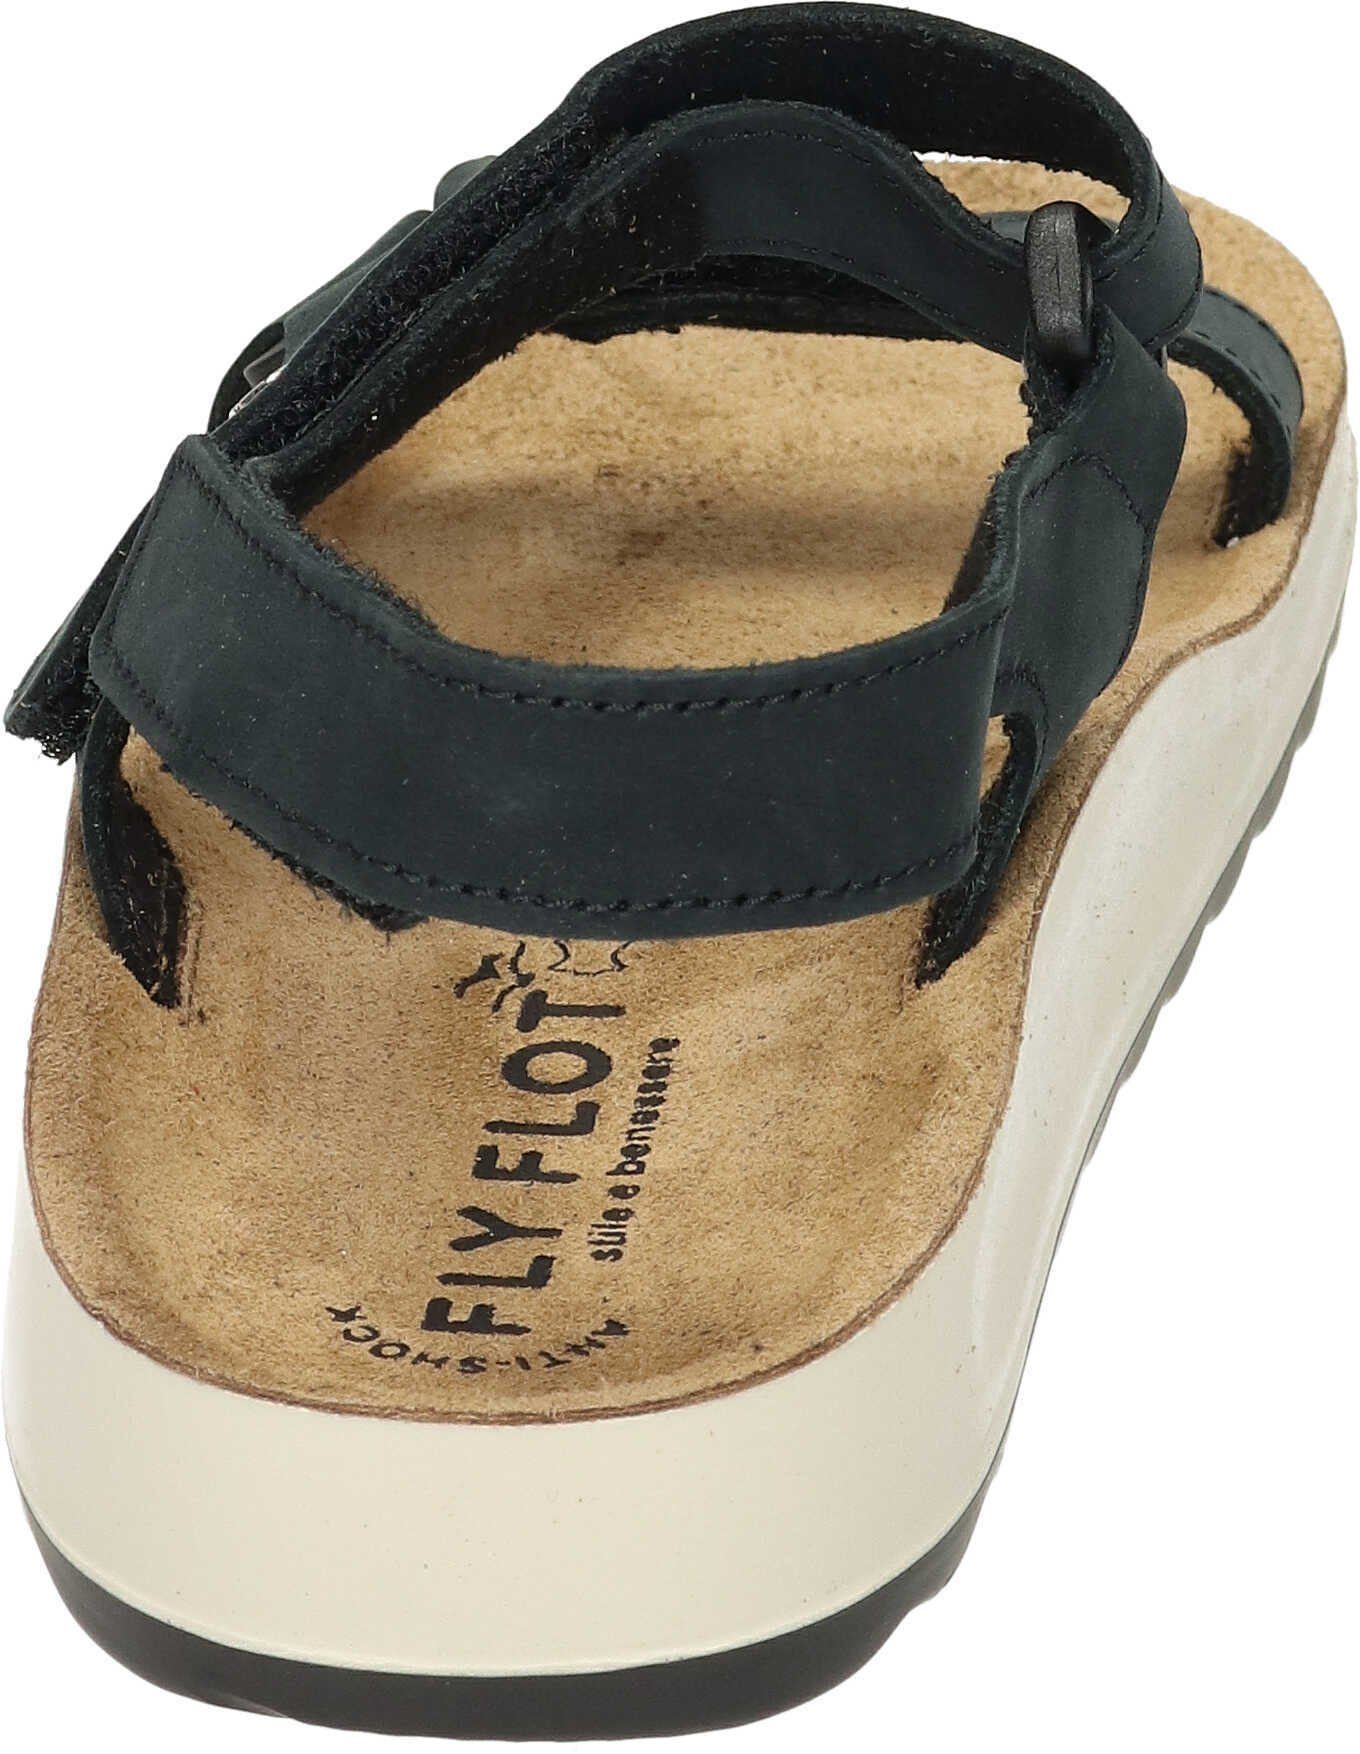 Fly Flot Sandalen Sandalette aus schwarz Nubukleder